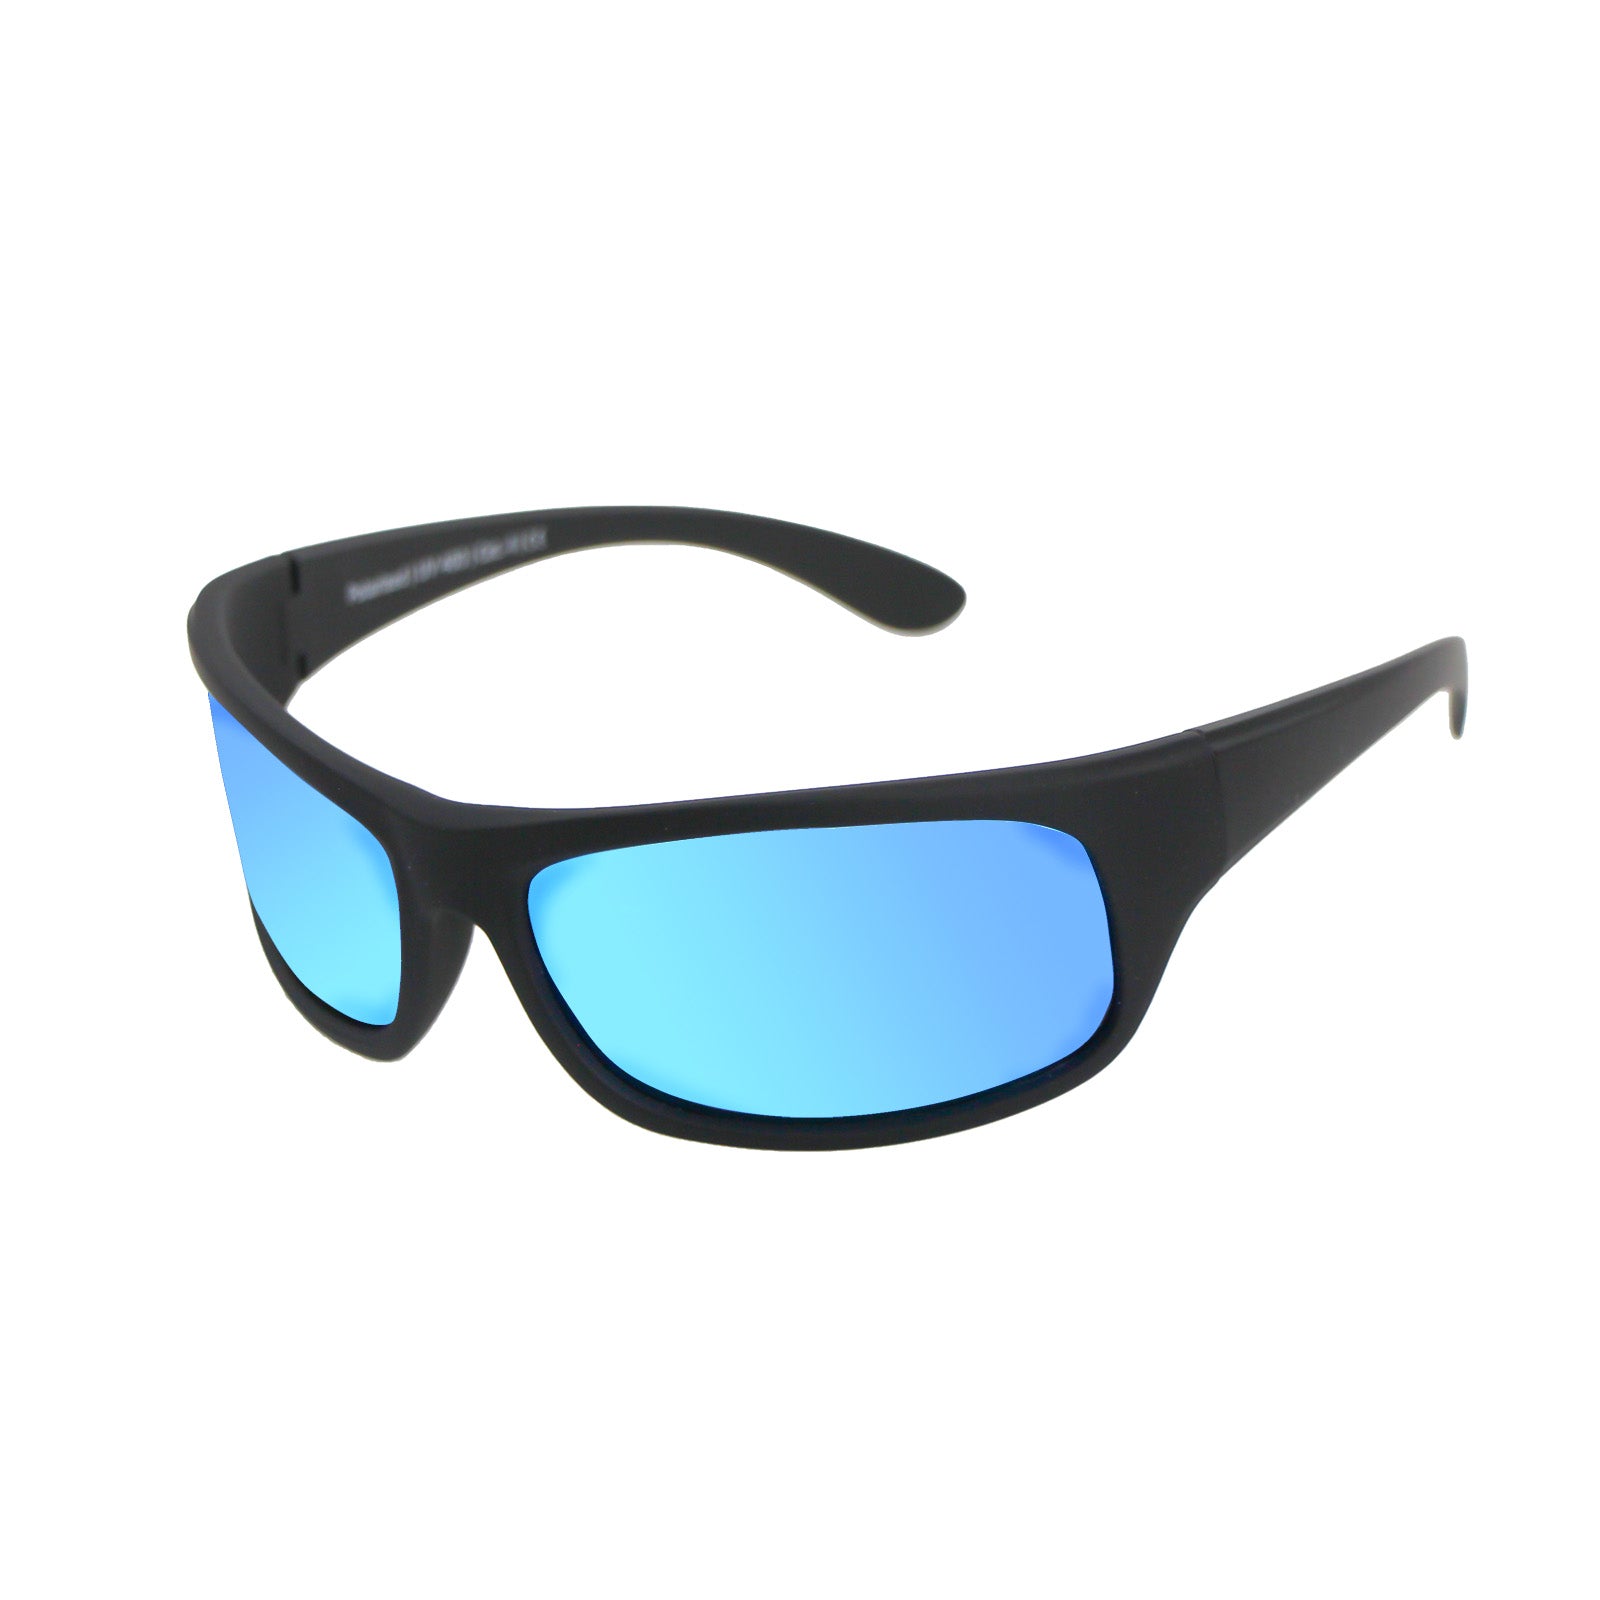 Sonnenbrille Erebos Extra Dunkel Kategorie 4 , L Blau verspiegelt